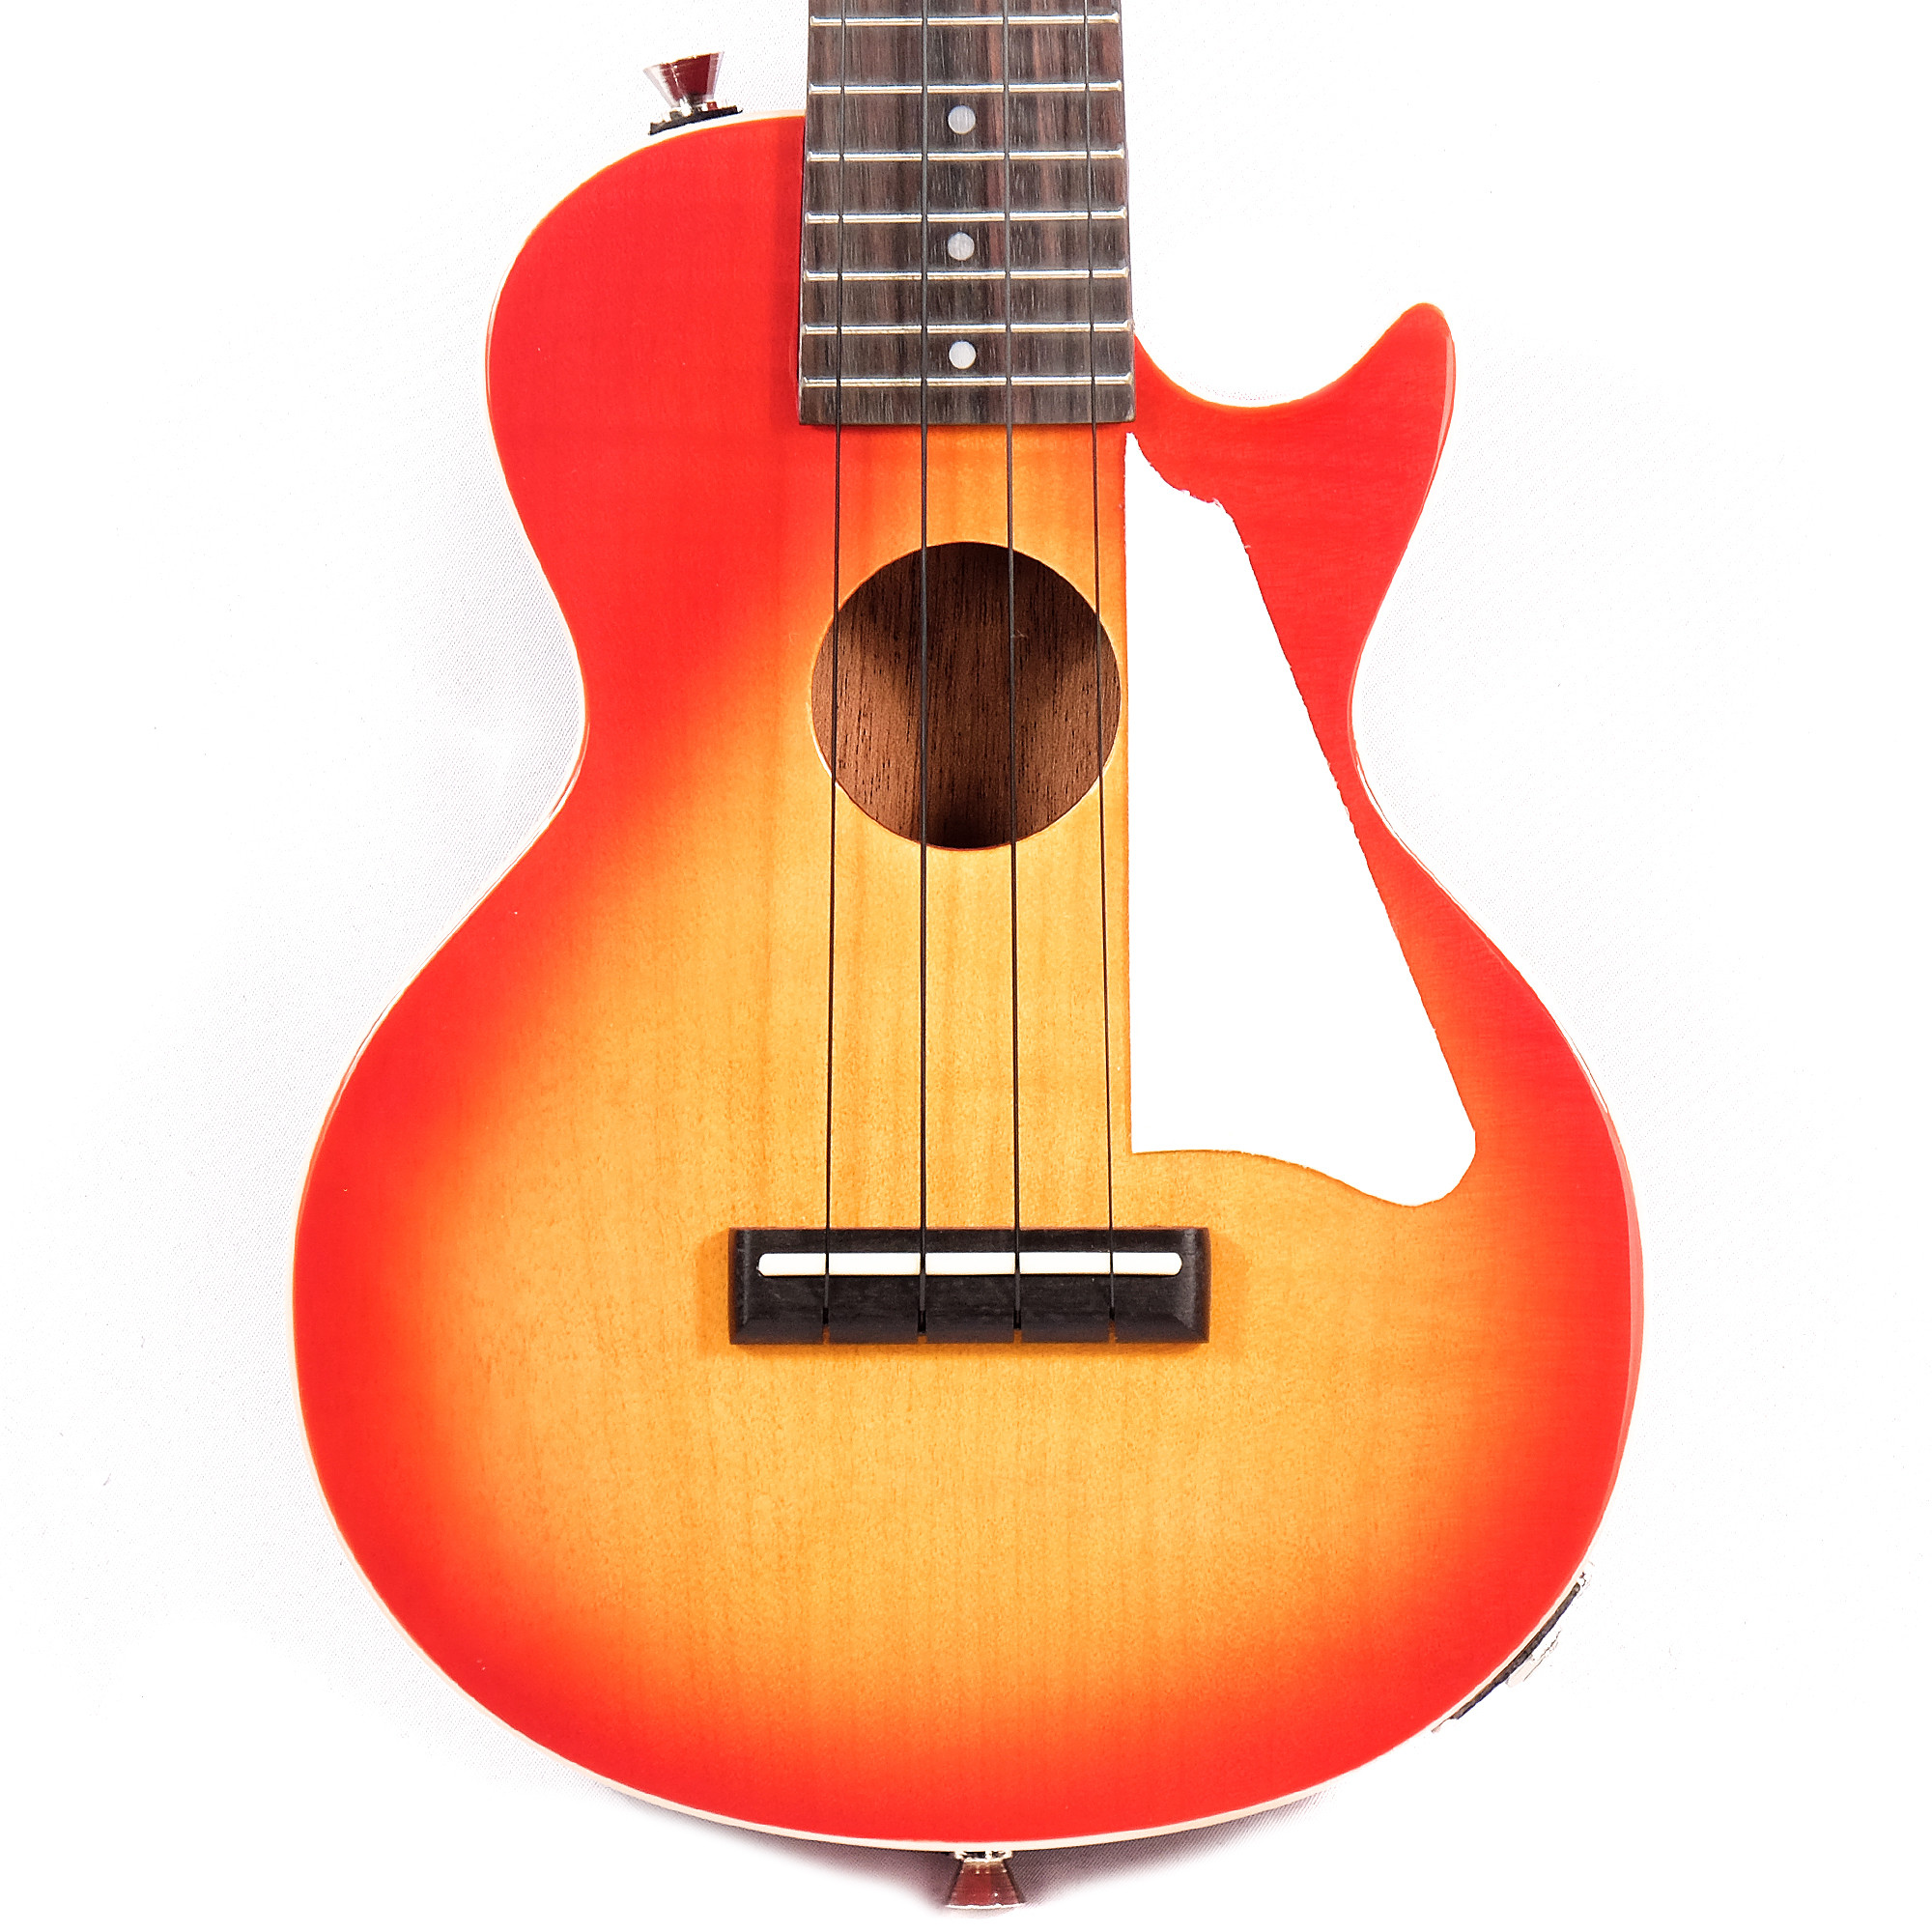 Акустическая гитара Epiphone Les Paul Ukulele Heritage Cherry